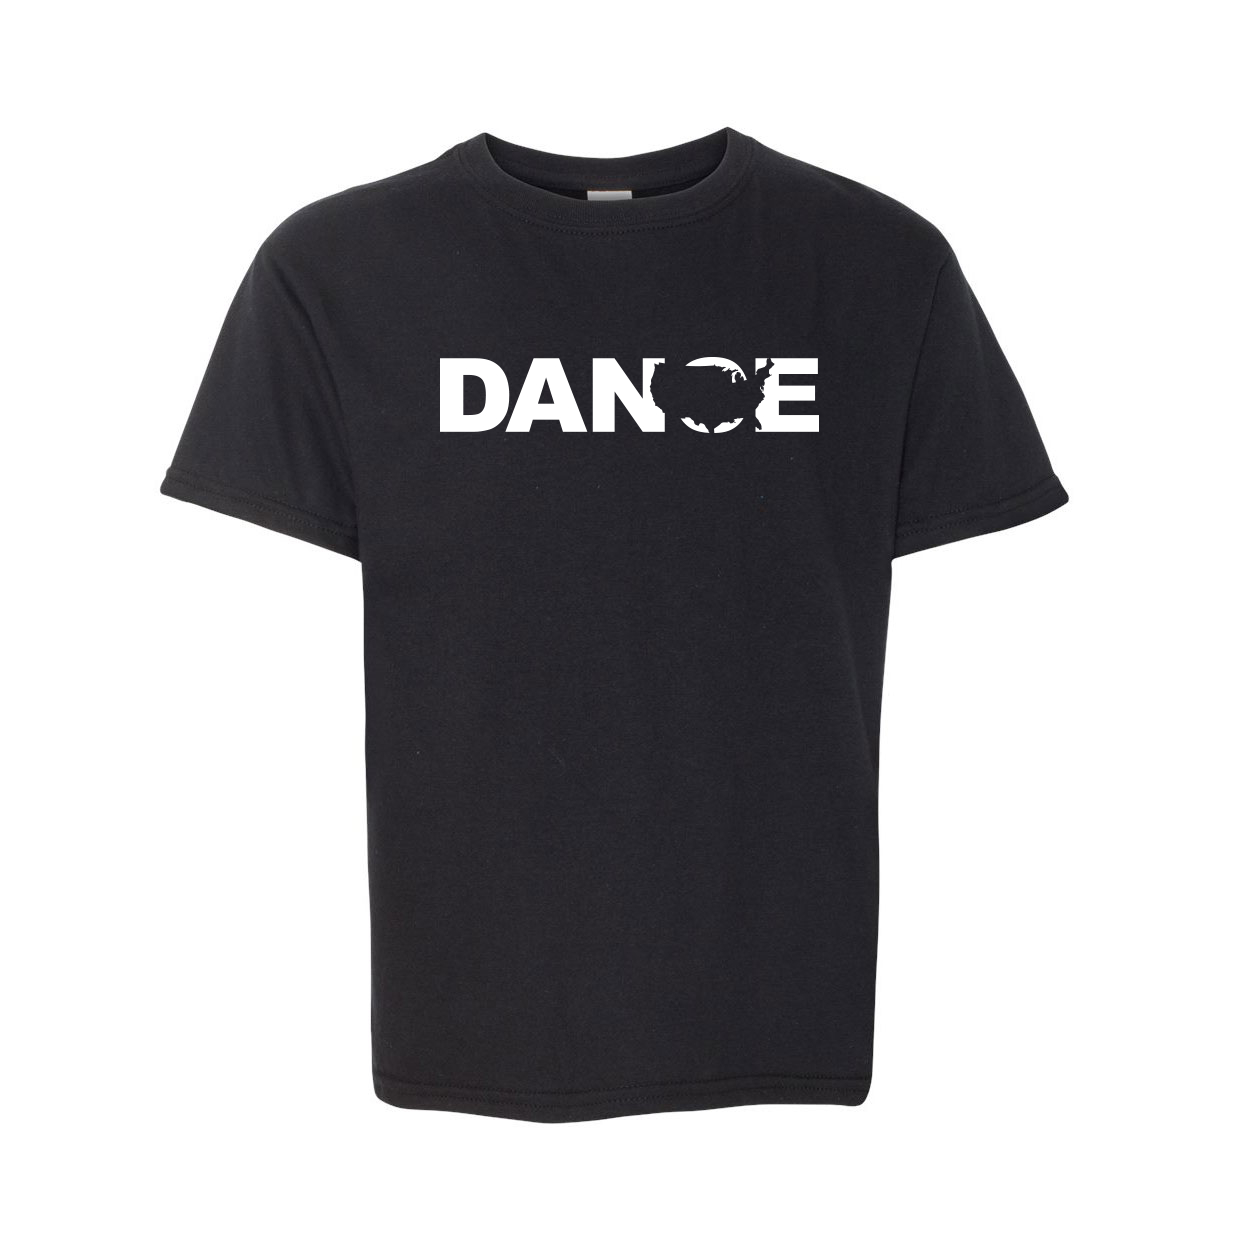 Dance United States Classic Youth T-Shirt Black (White Logo)